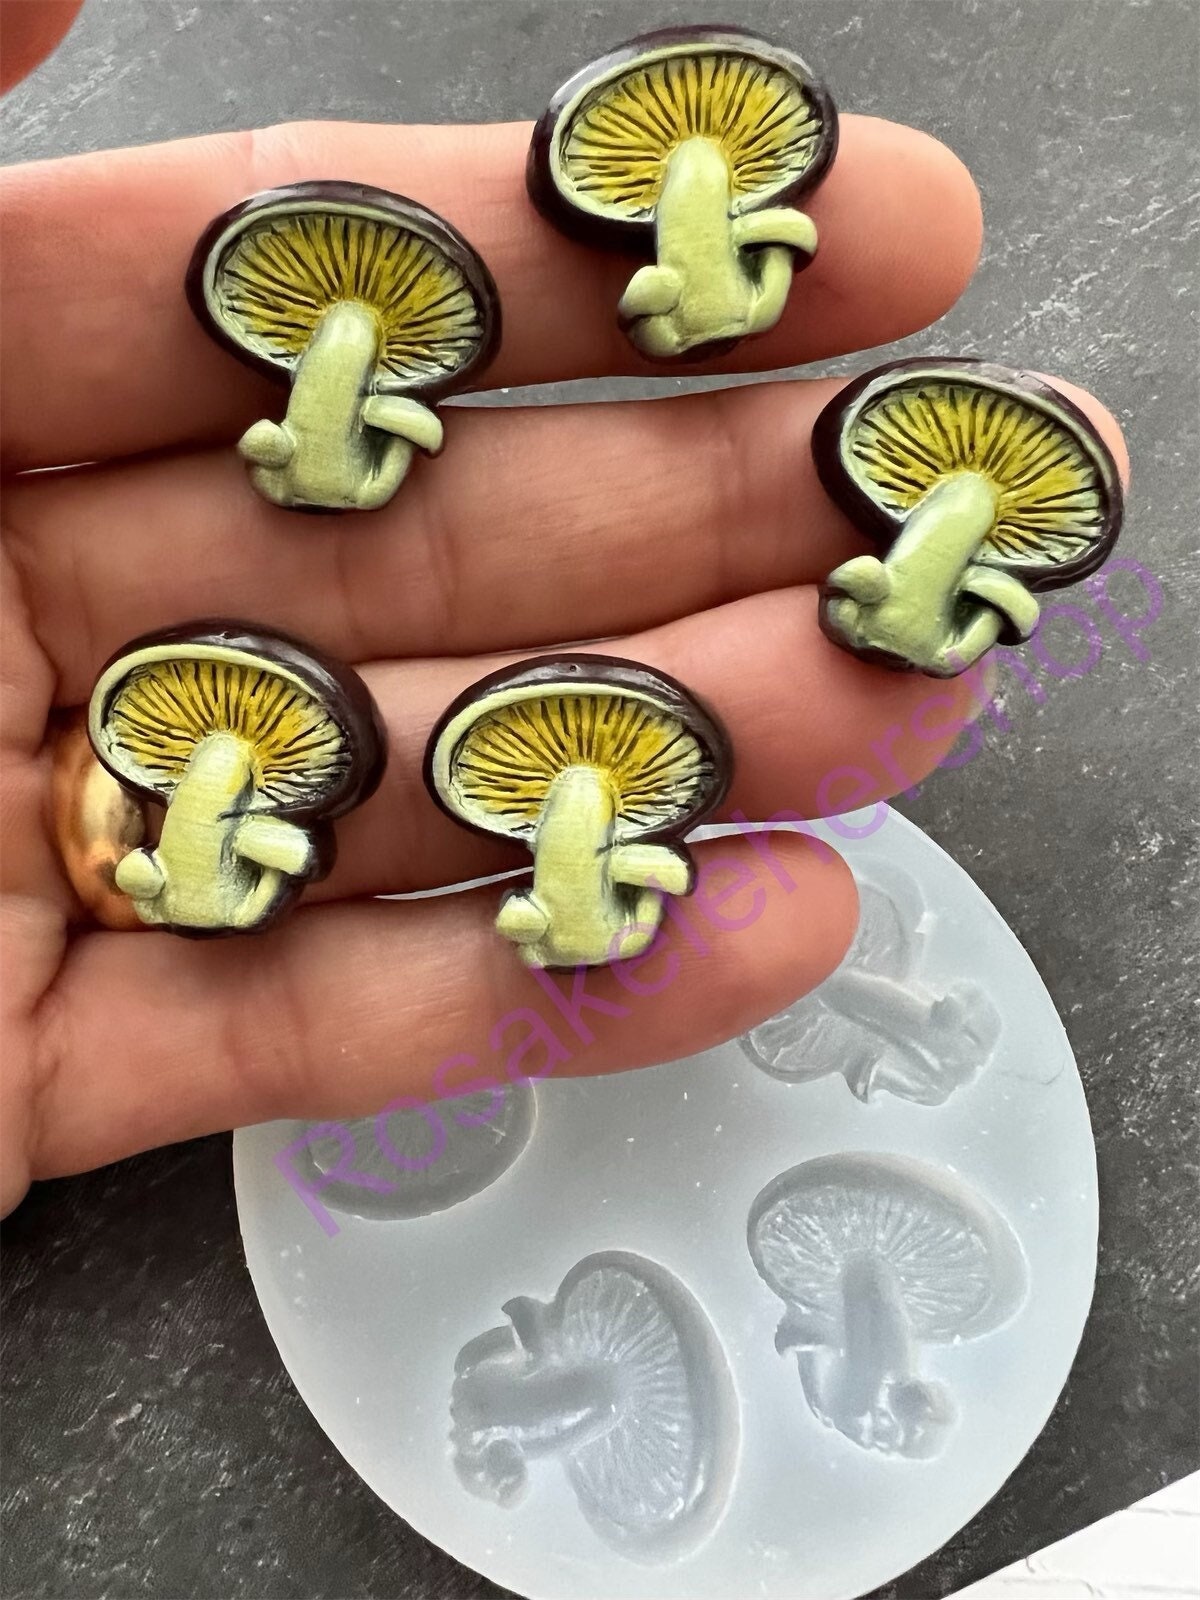 3D Micro Mushroom for Resin Art DIY Craft Resin Jewelry Casting Filler,  Mini Mushroom Landscape Decoration 